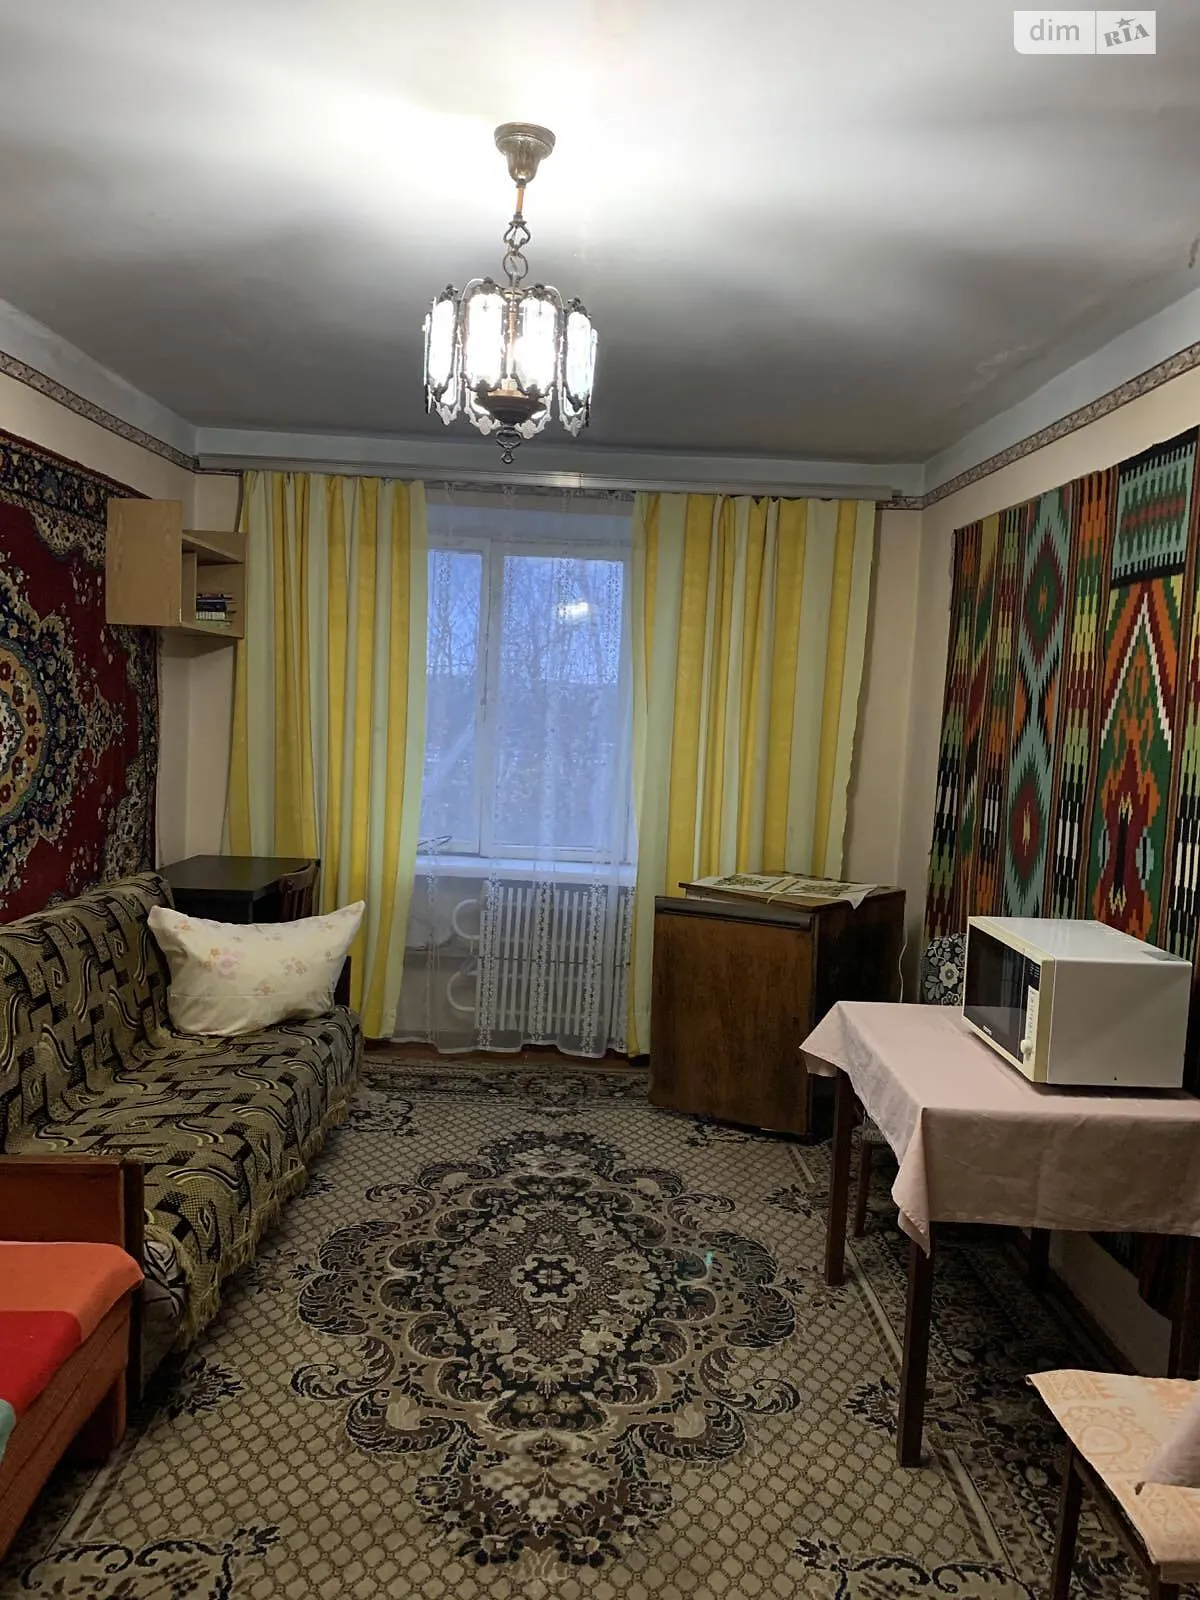 Сдается в аренду комната 18 кв. м в Тернополе - фото 2